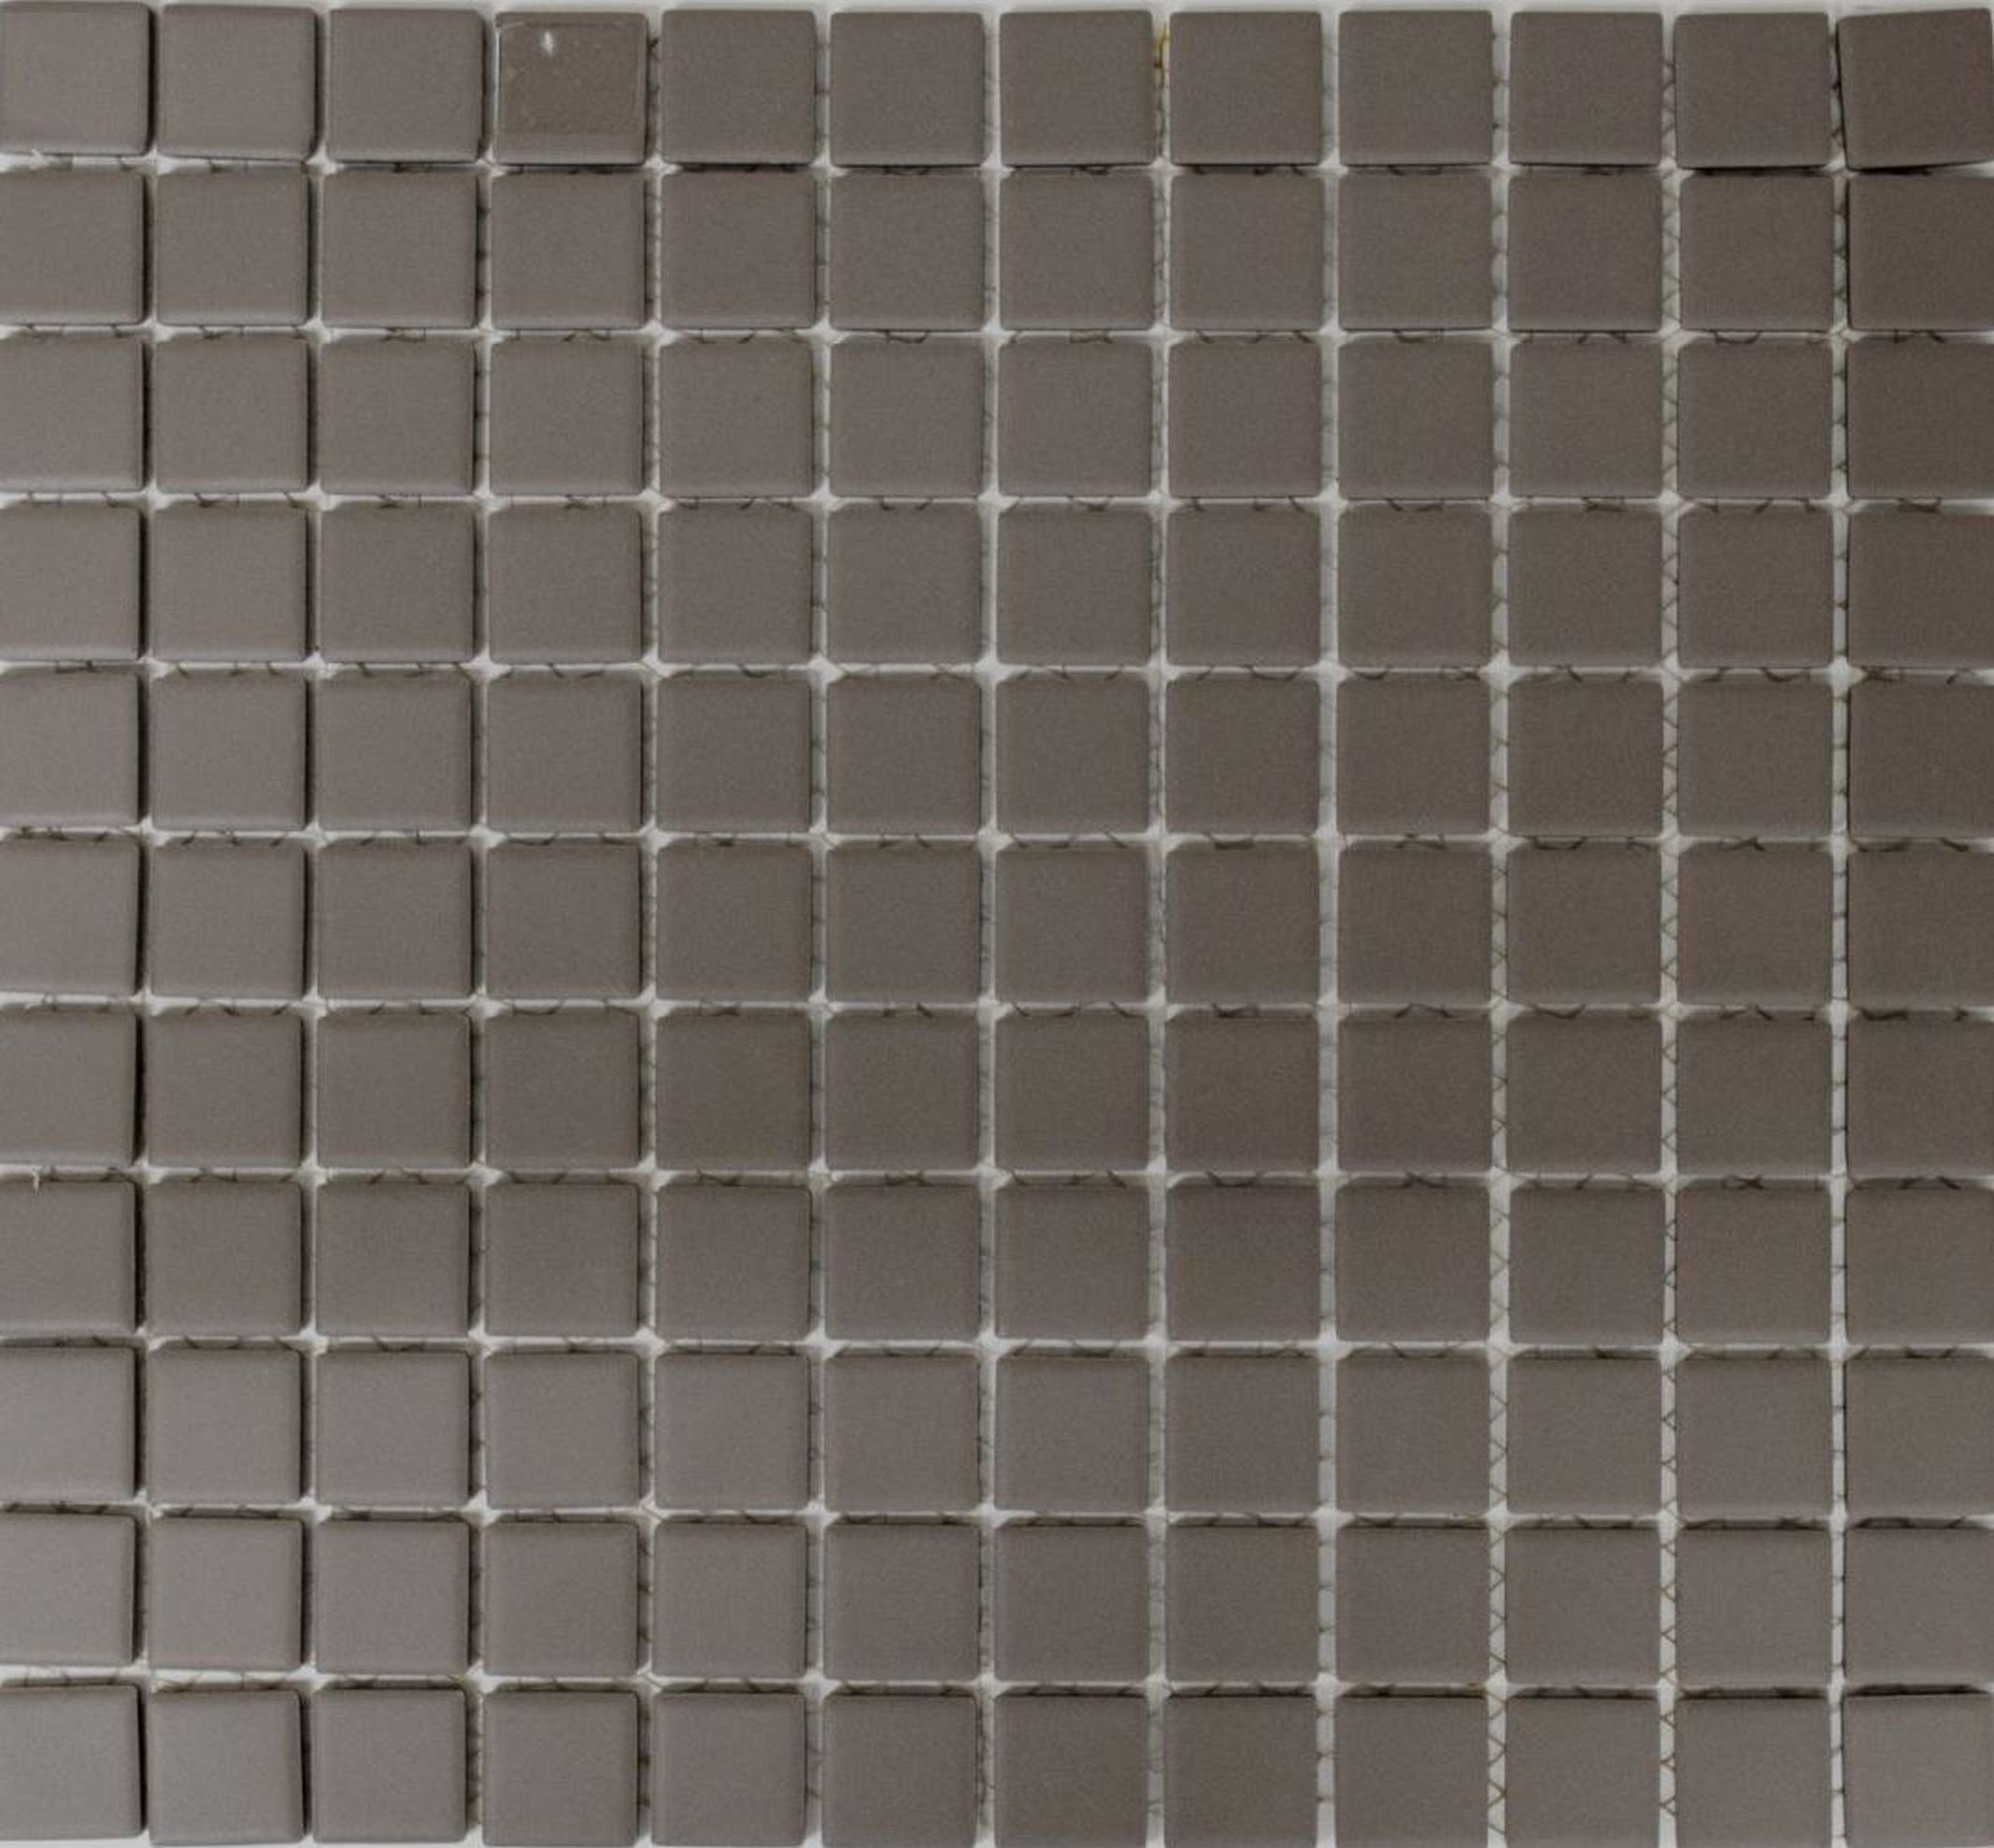 Mosani Mosaikfliesen Quadratisches Keramikmosaik unglasiert Mosaik grau matt / 10 Matten